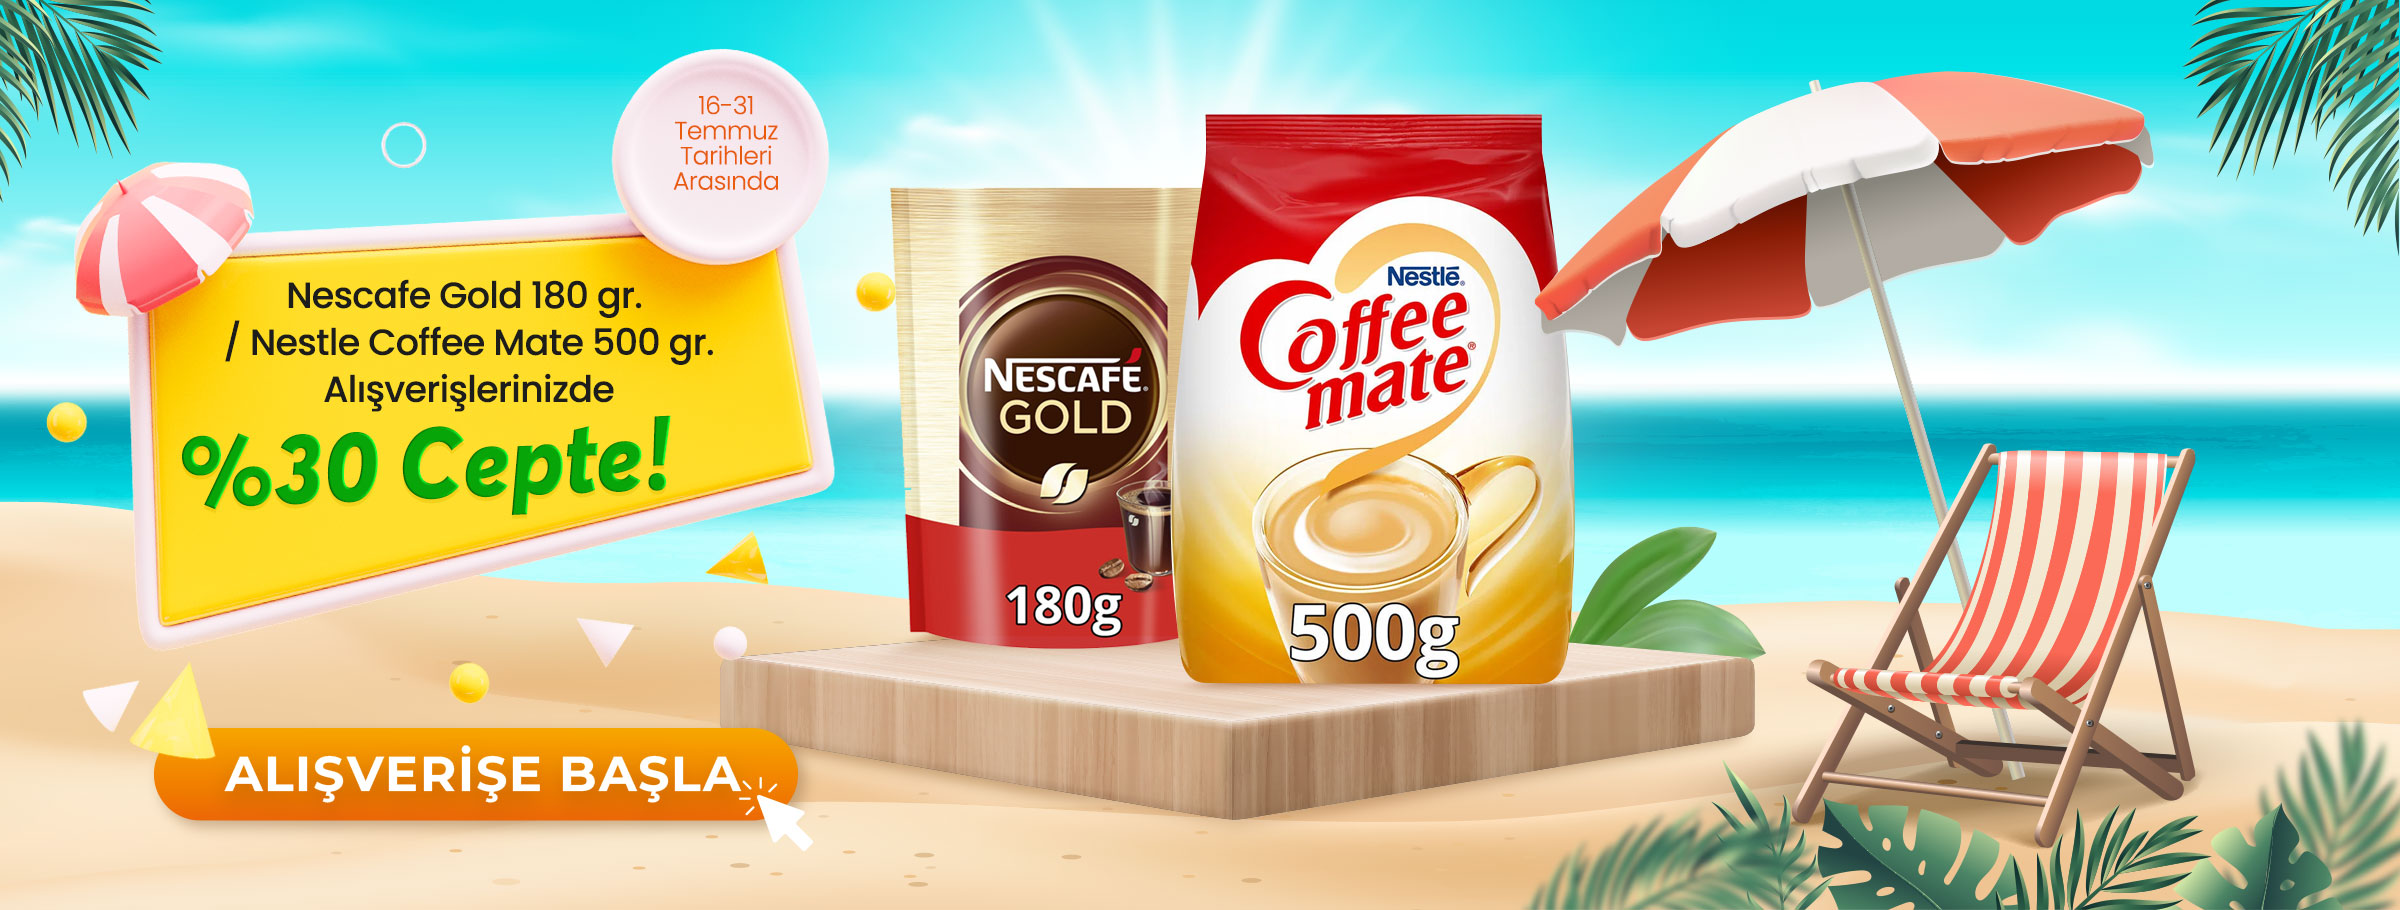 Nescafe Gold 180 gr & Nestle Coffe Mate 500 gr Ürünlerde %30 Cepte